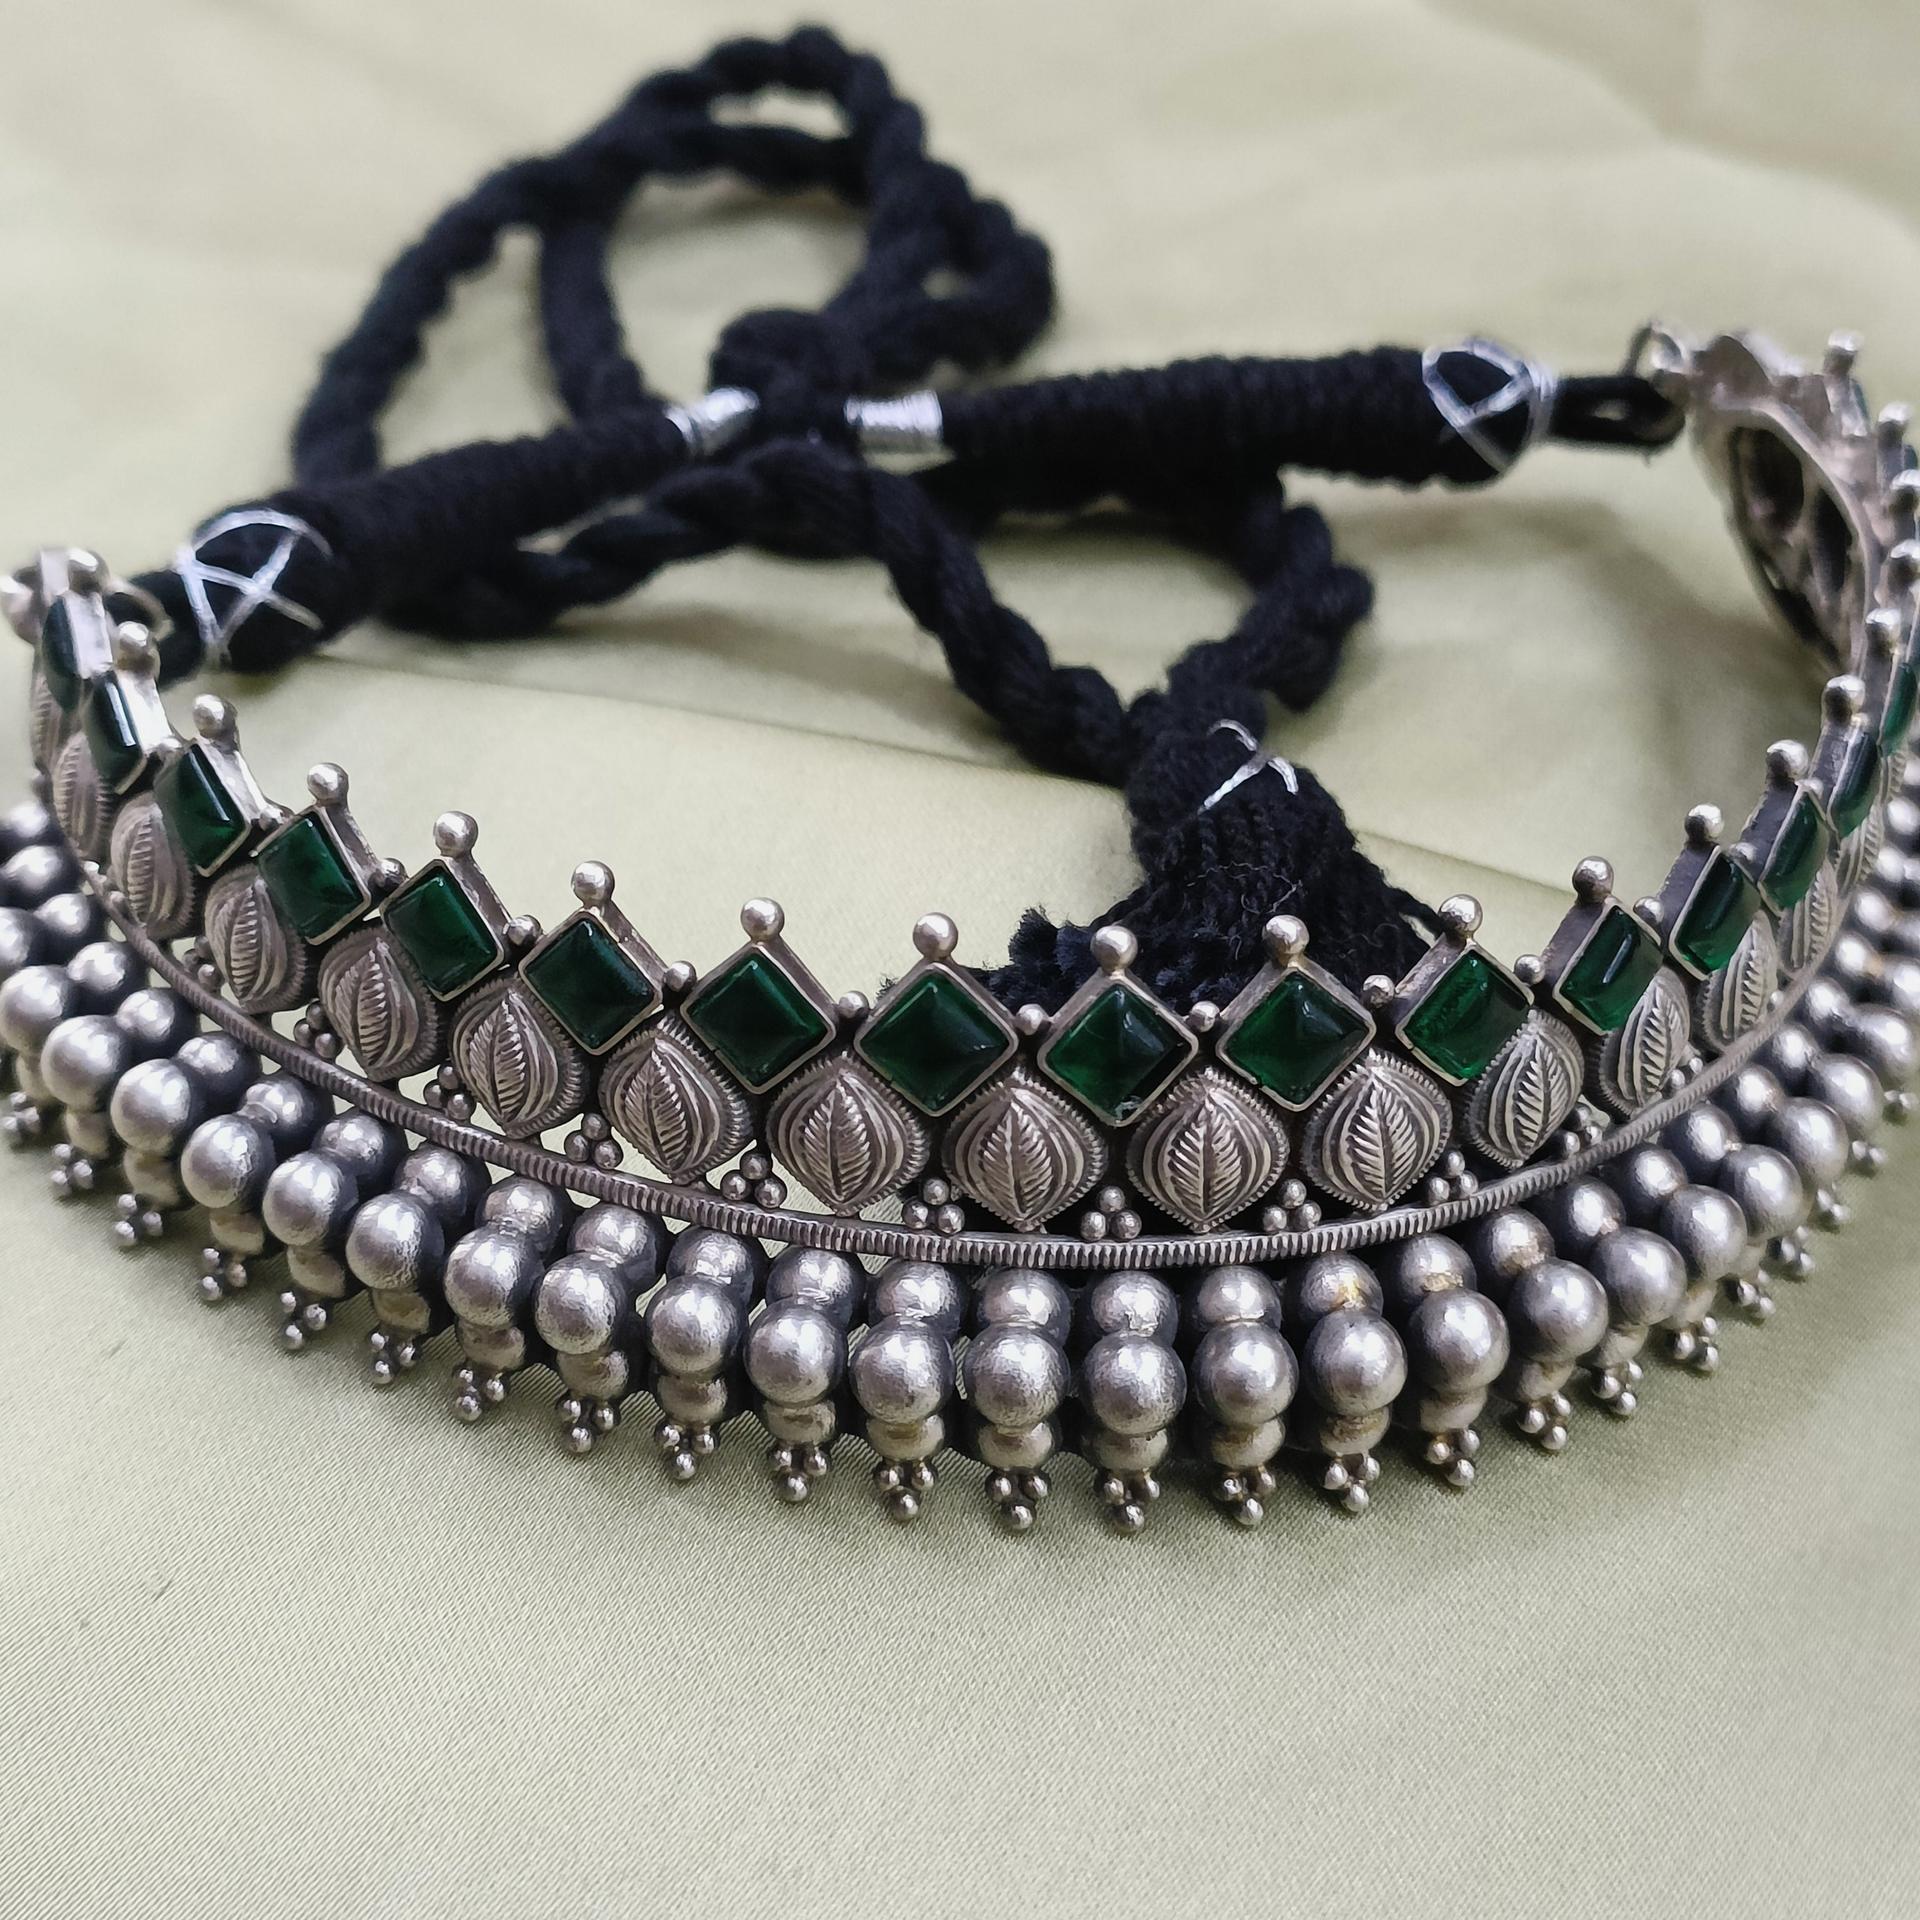 92.5 handcrafted silver neckpiece